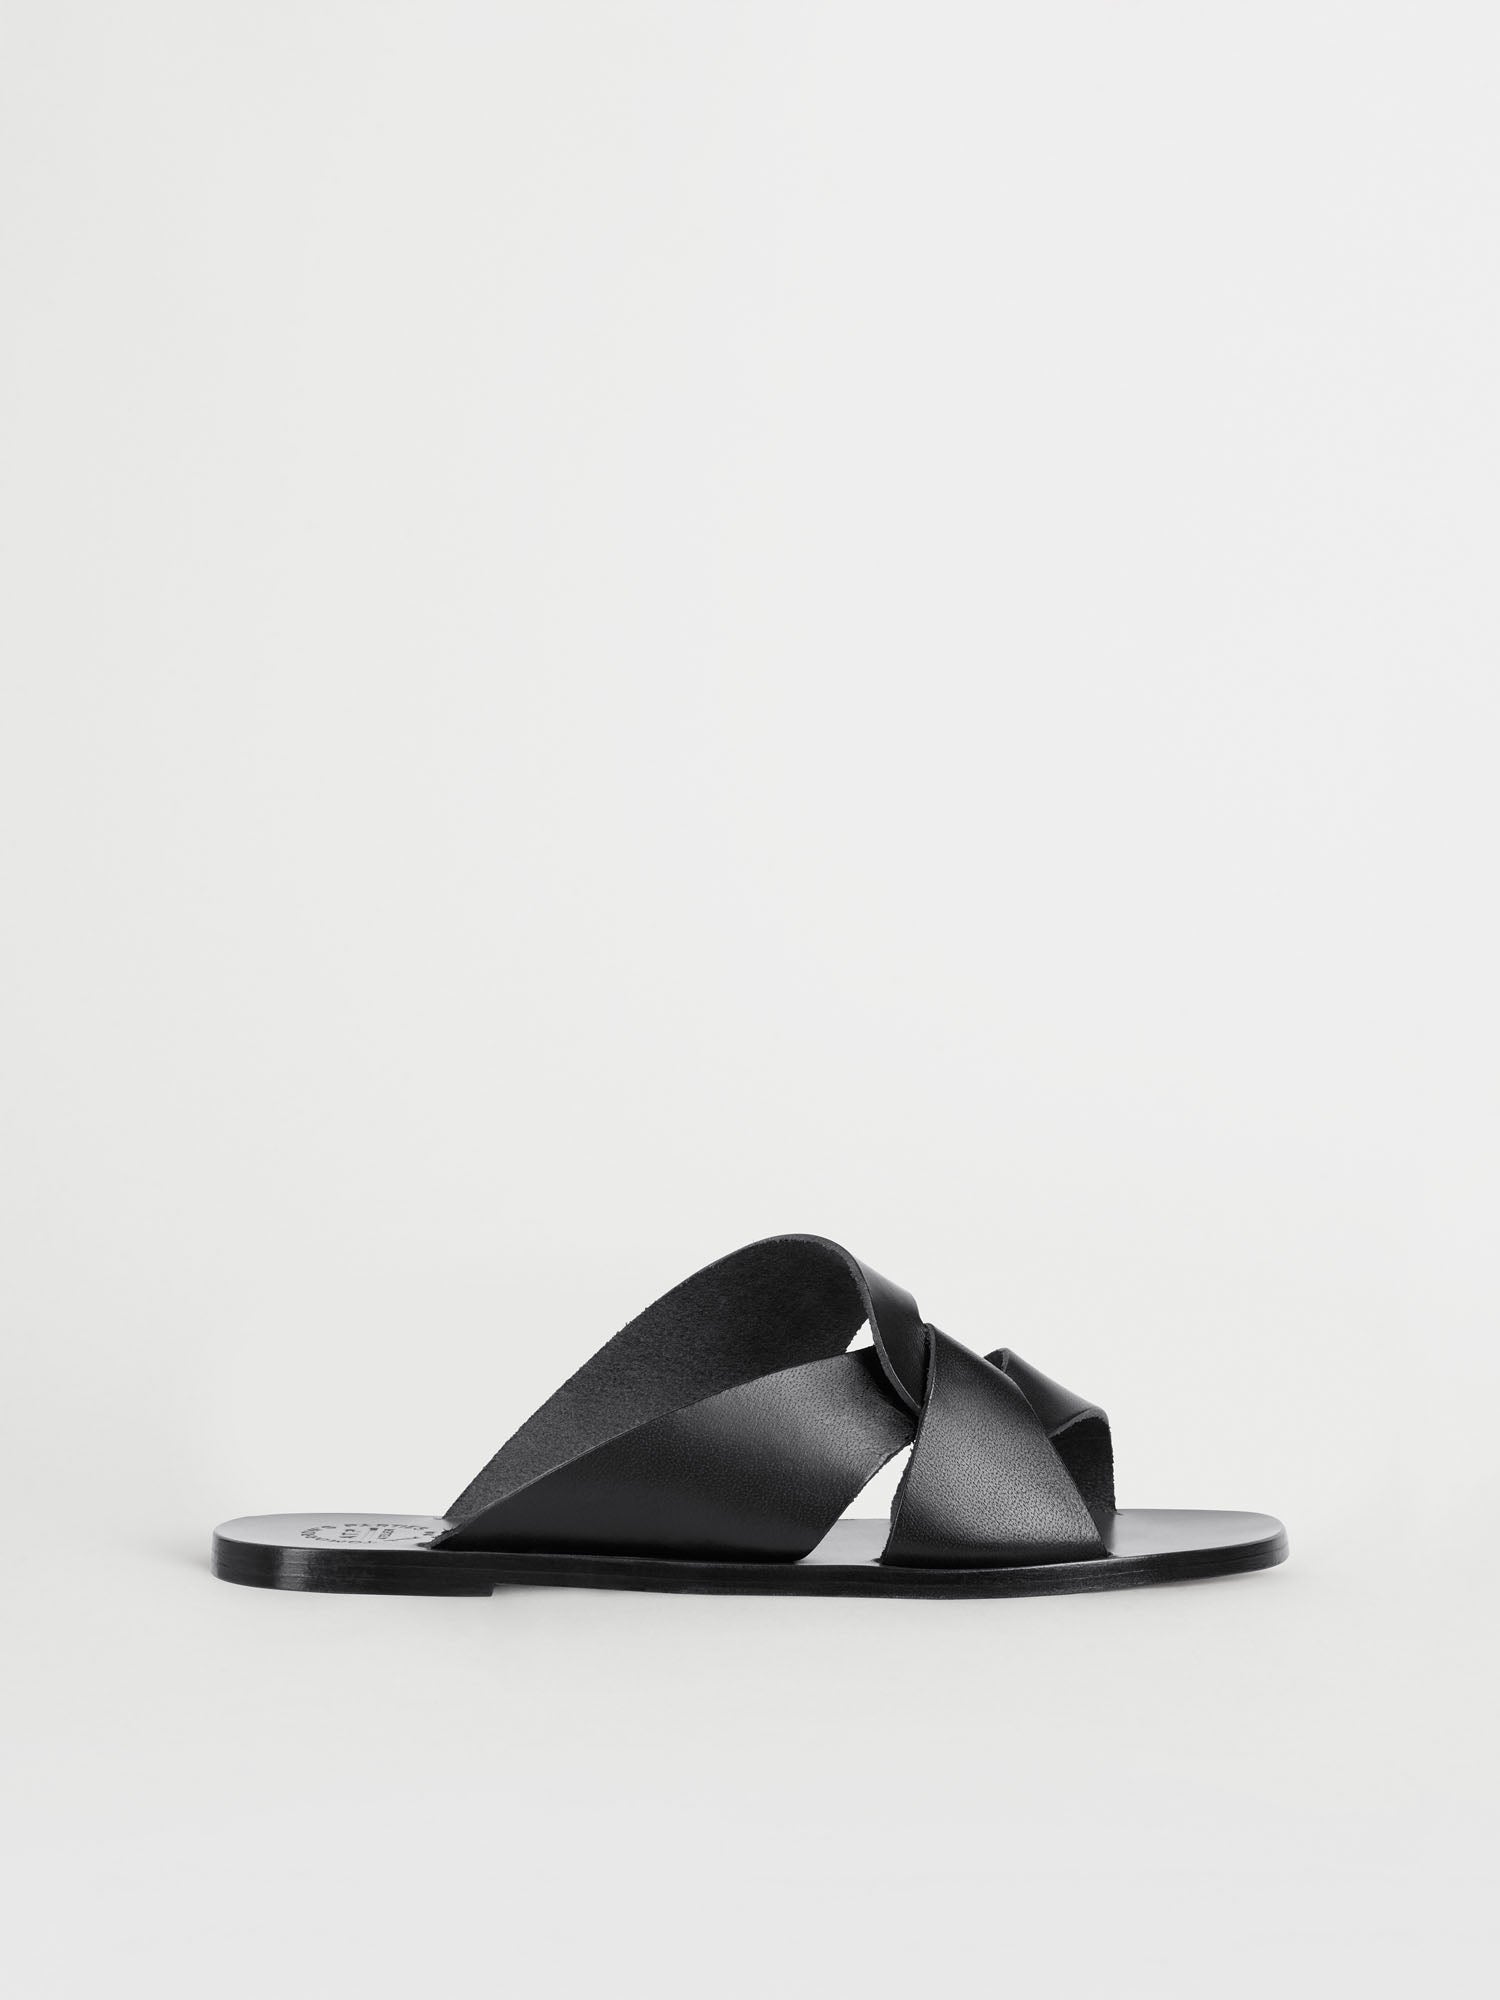 Allai Black Leather Flat sandals